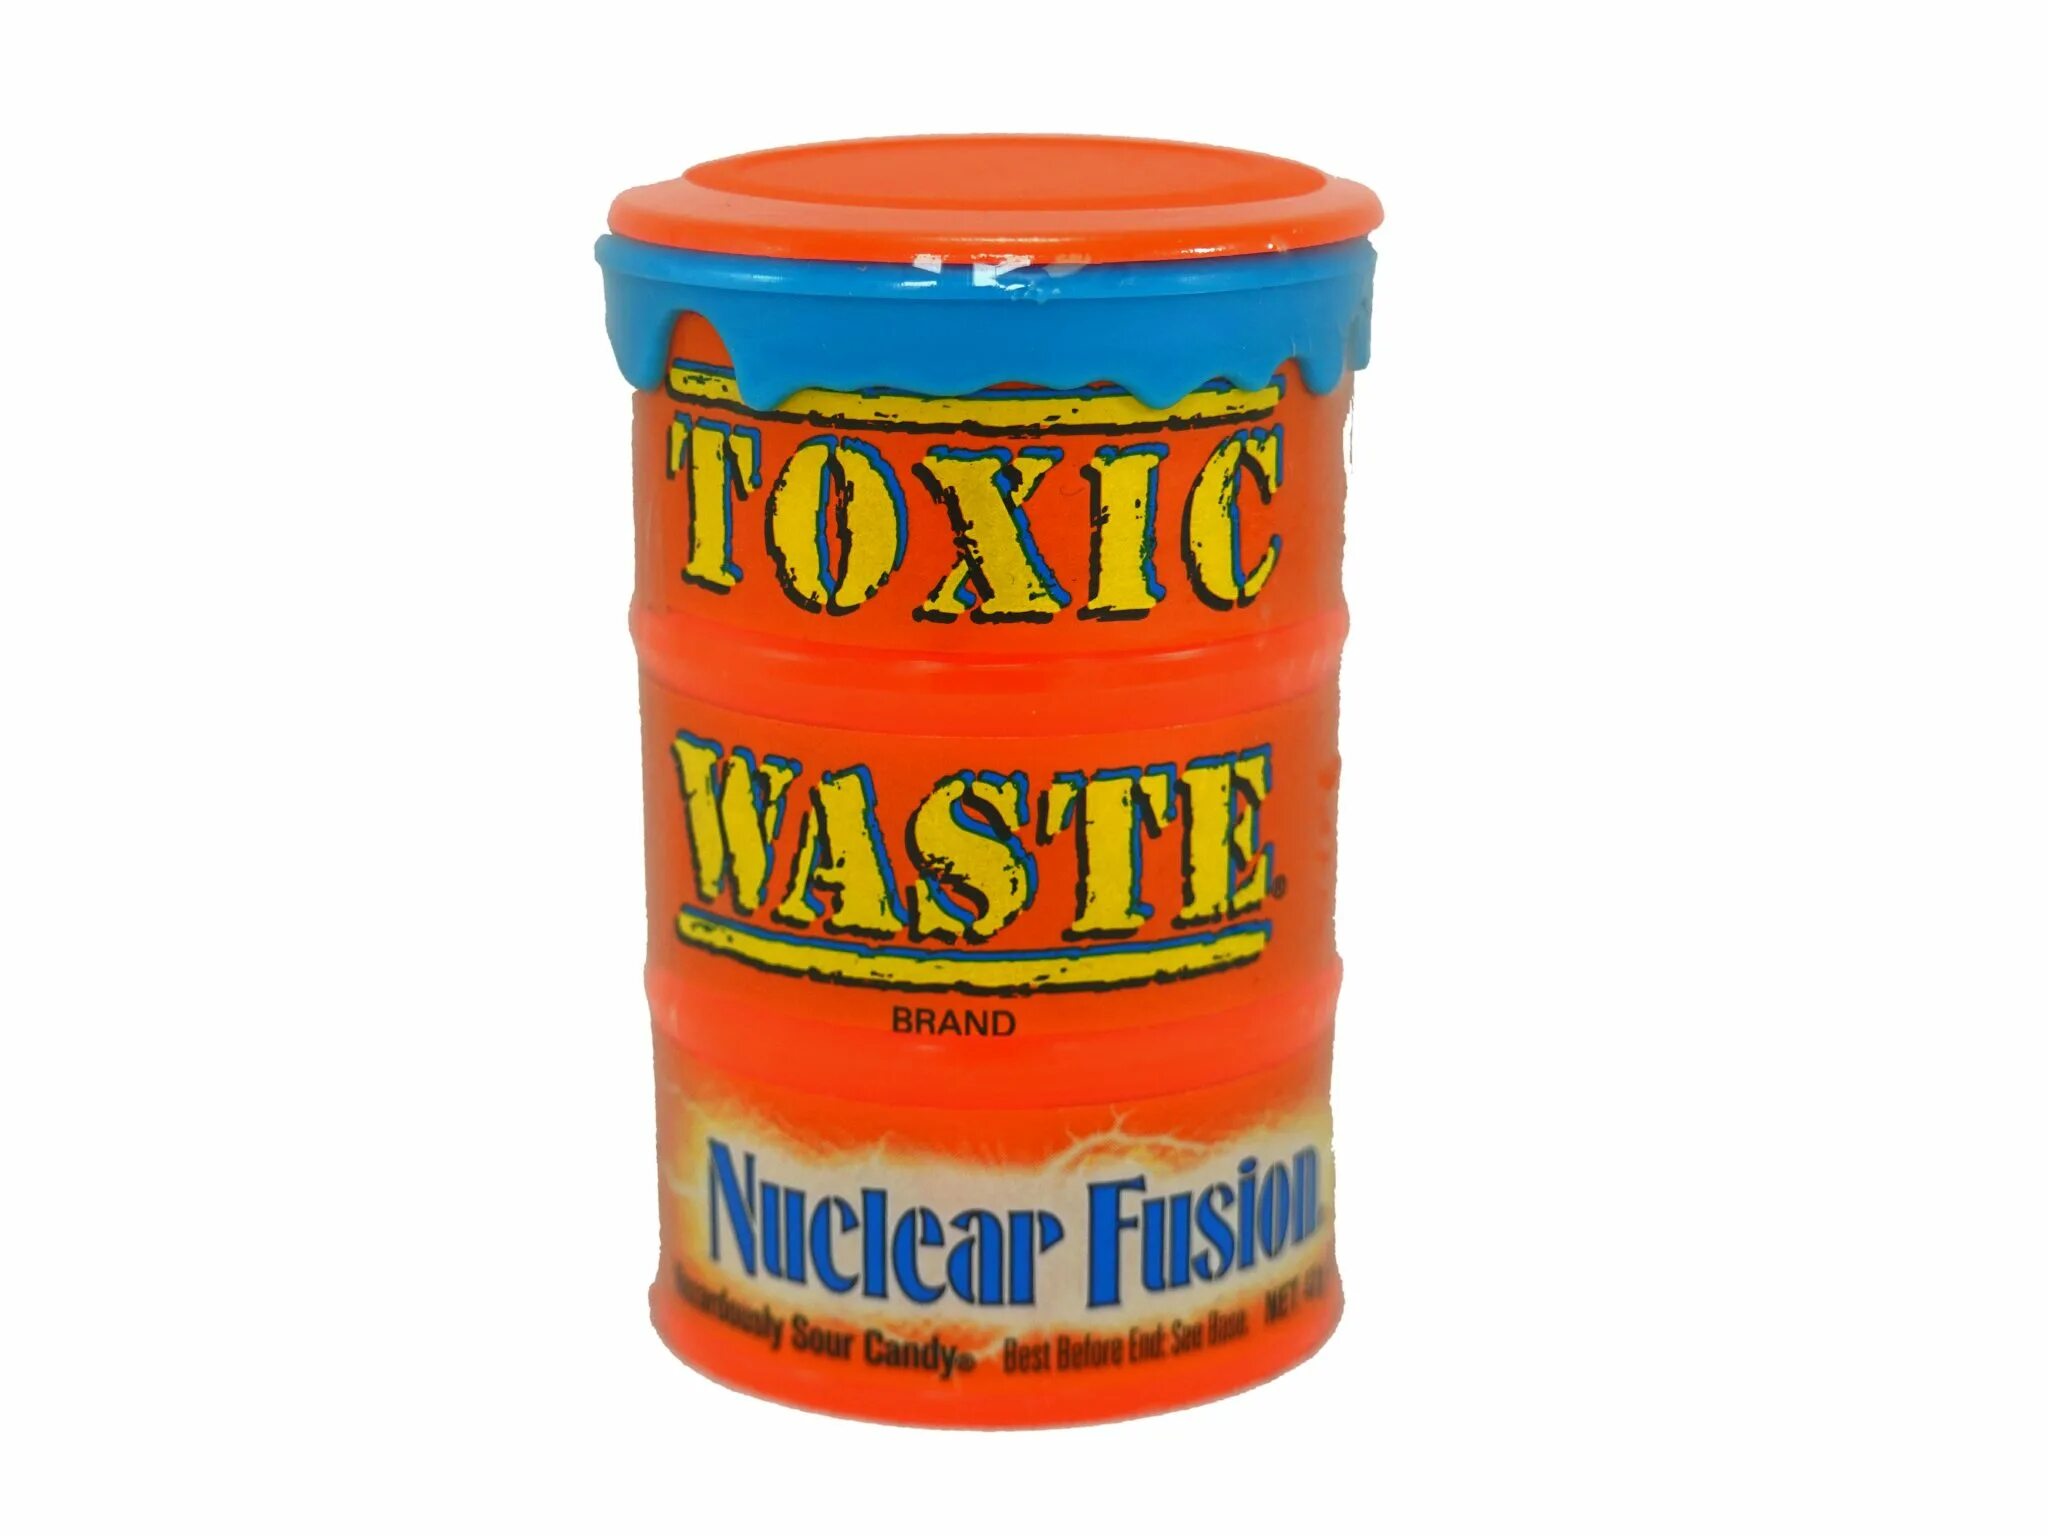 Леденцы Toxic waste nuclear Fusion 42гр. Toxic waste конфеты. Токсик леденцы Фьюжин 42гр (оранжевая бочка) (12). Конфеты Toxic waste nuclear Fusion 42г оранжевая. Токсик конфеты